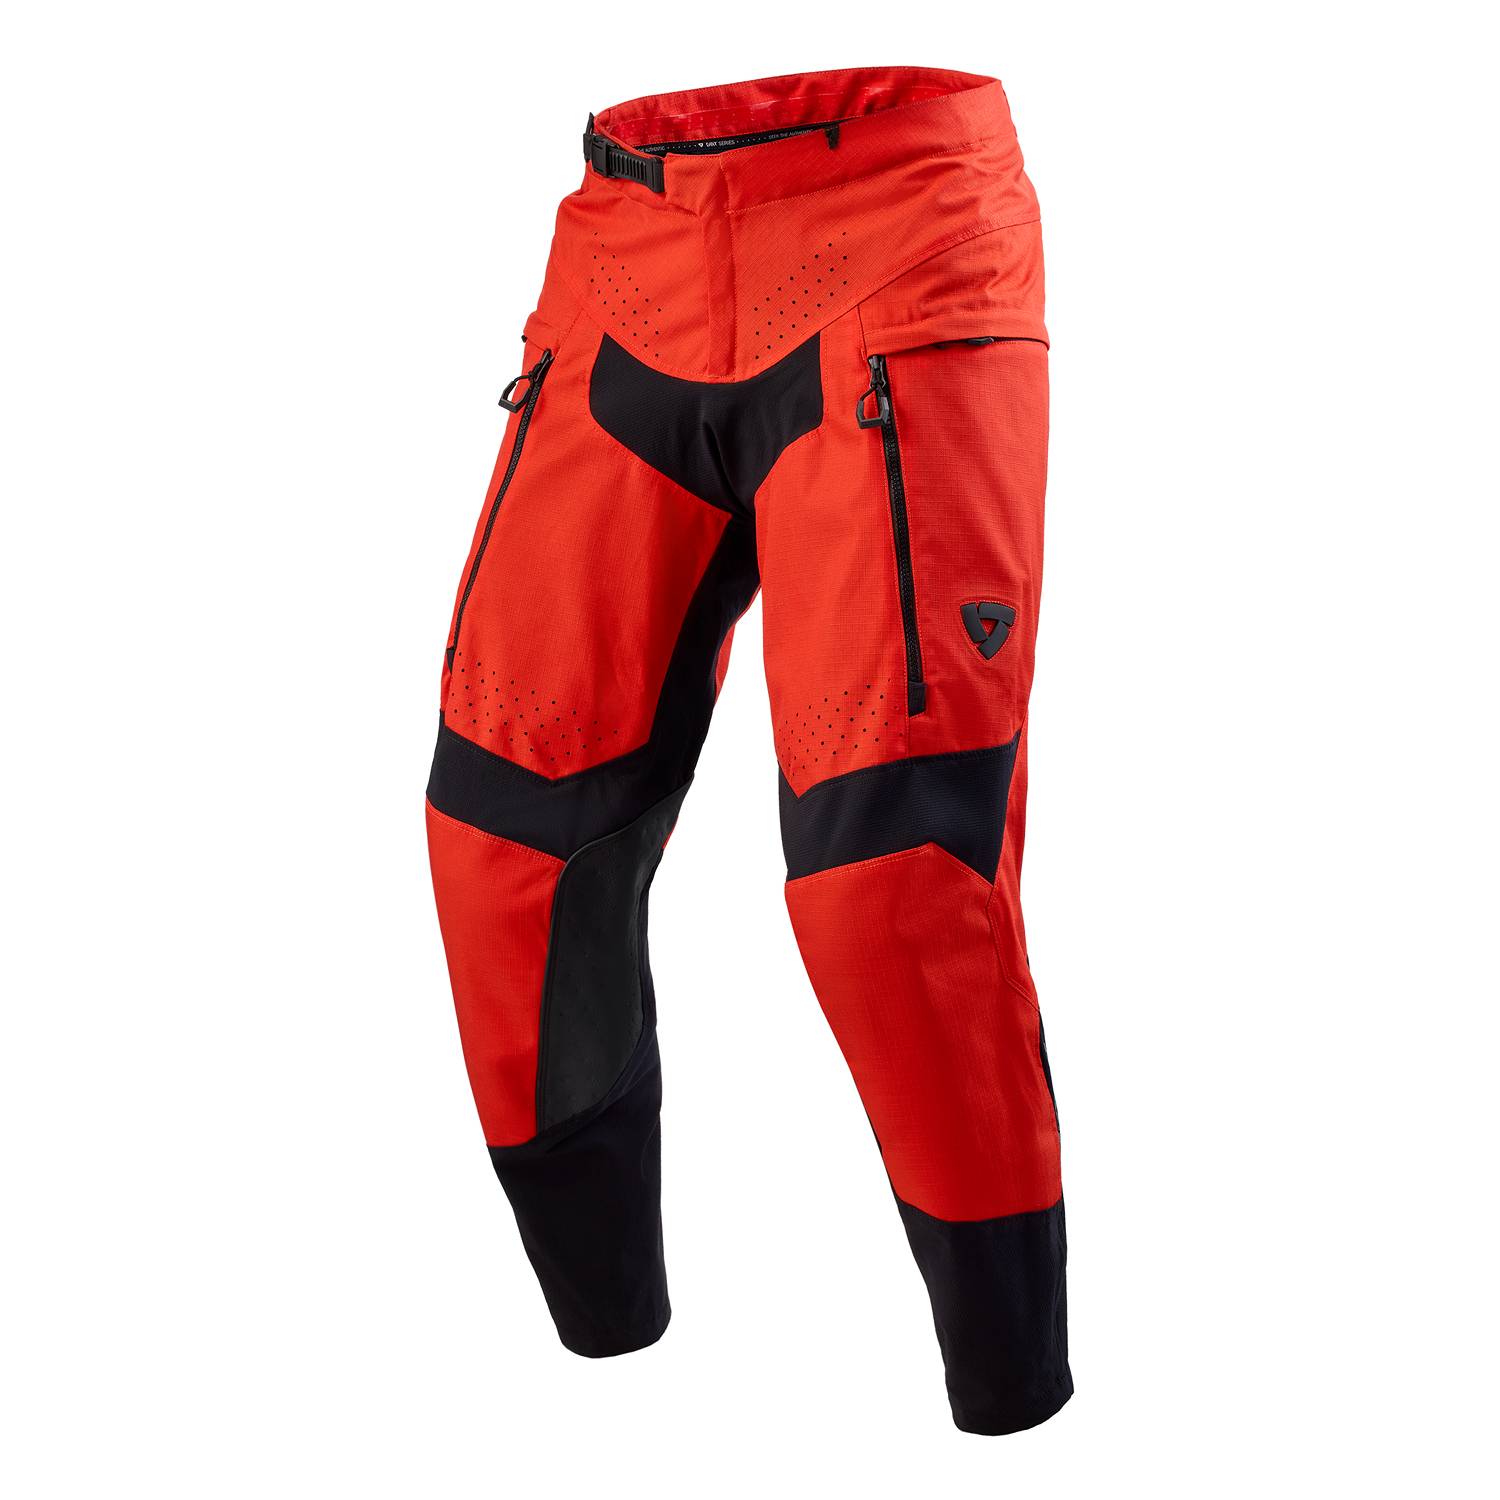 Image of REV'IT! Pants Peninsula Red Short Motorcycle Pants Size 2XL ID 8700001349093